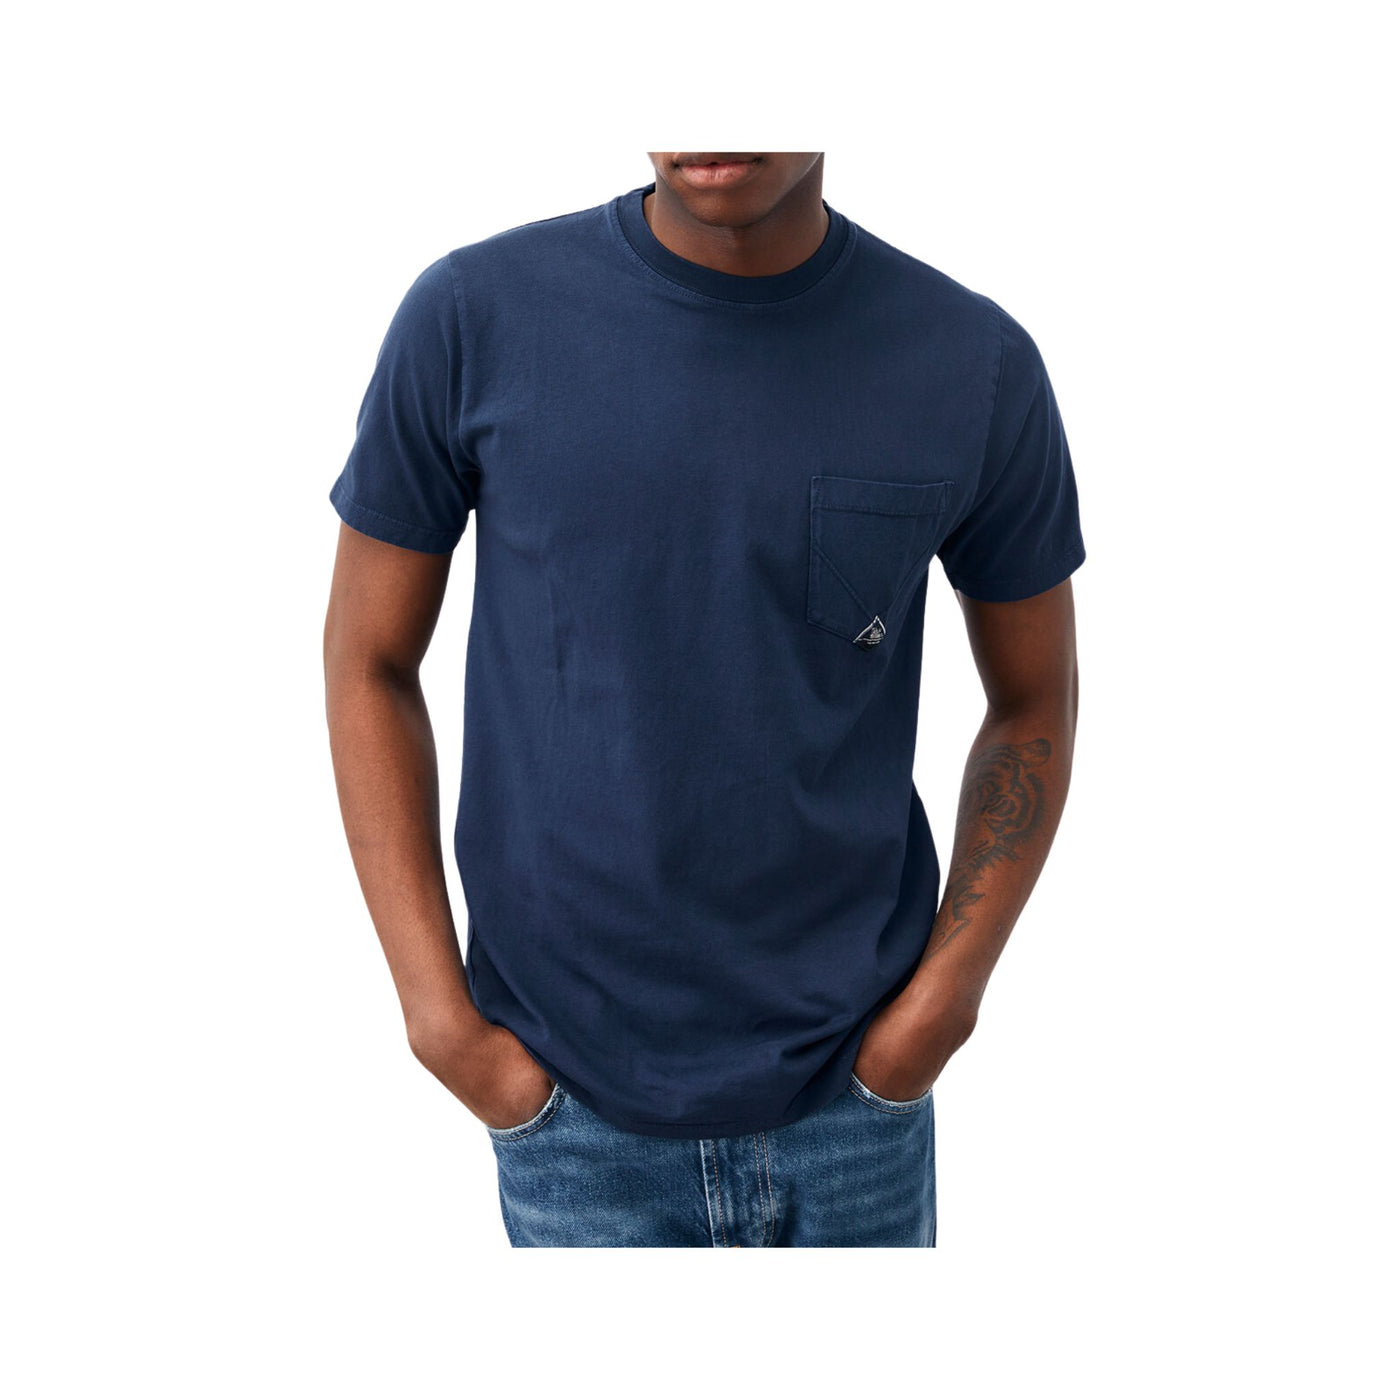 Men's crew neck t-shirt with pocket